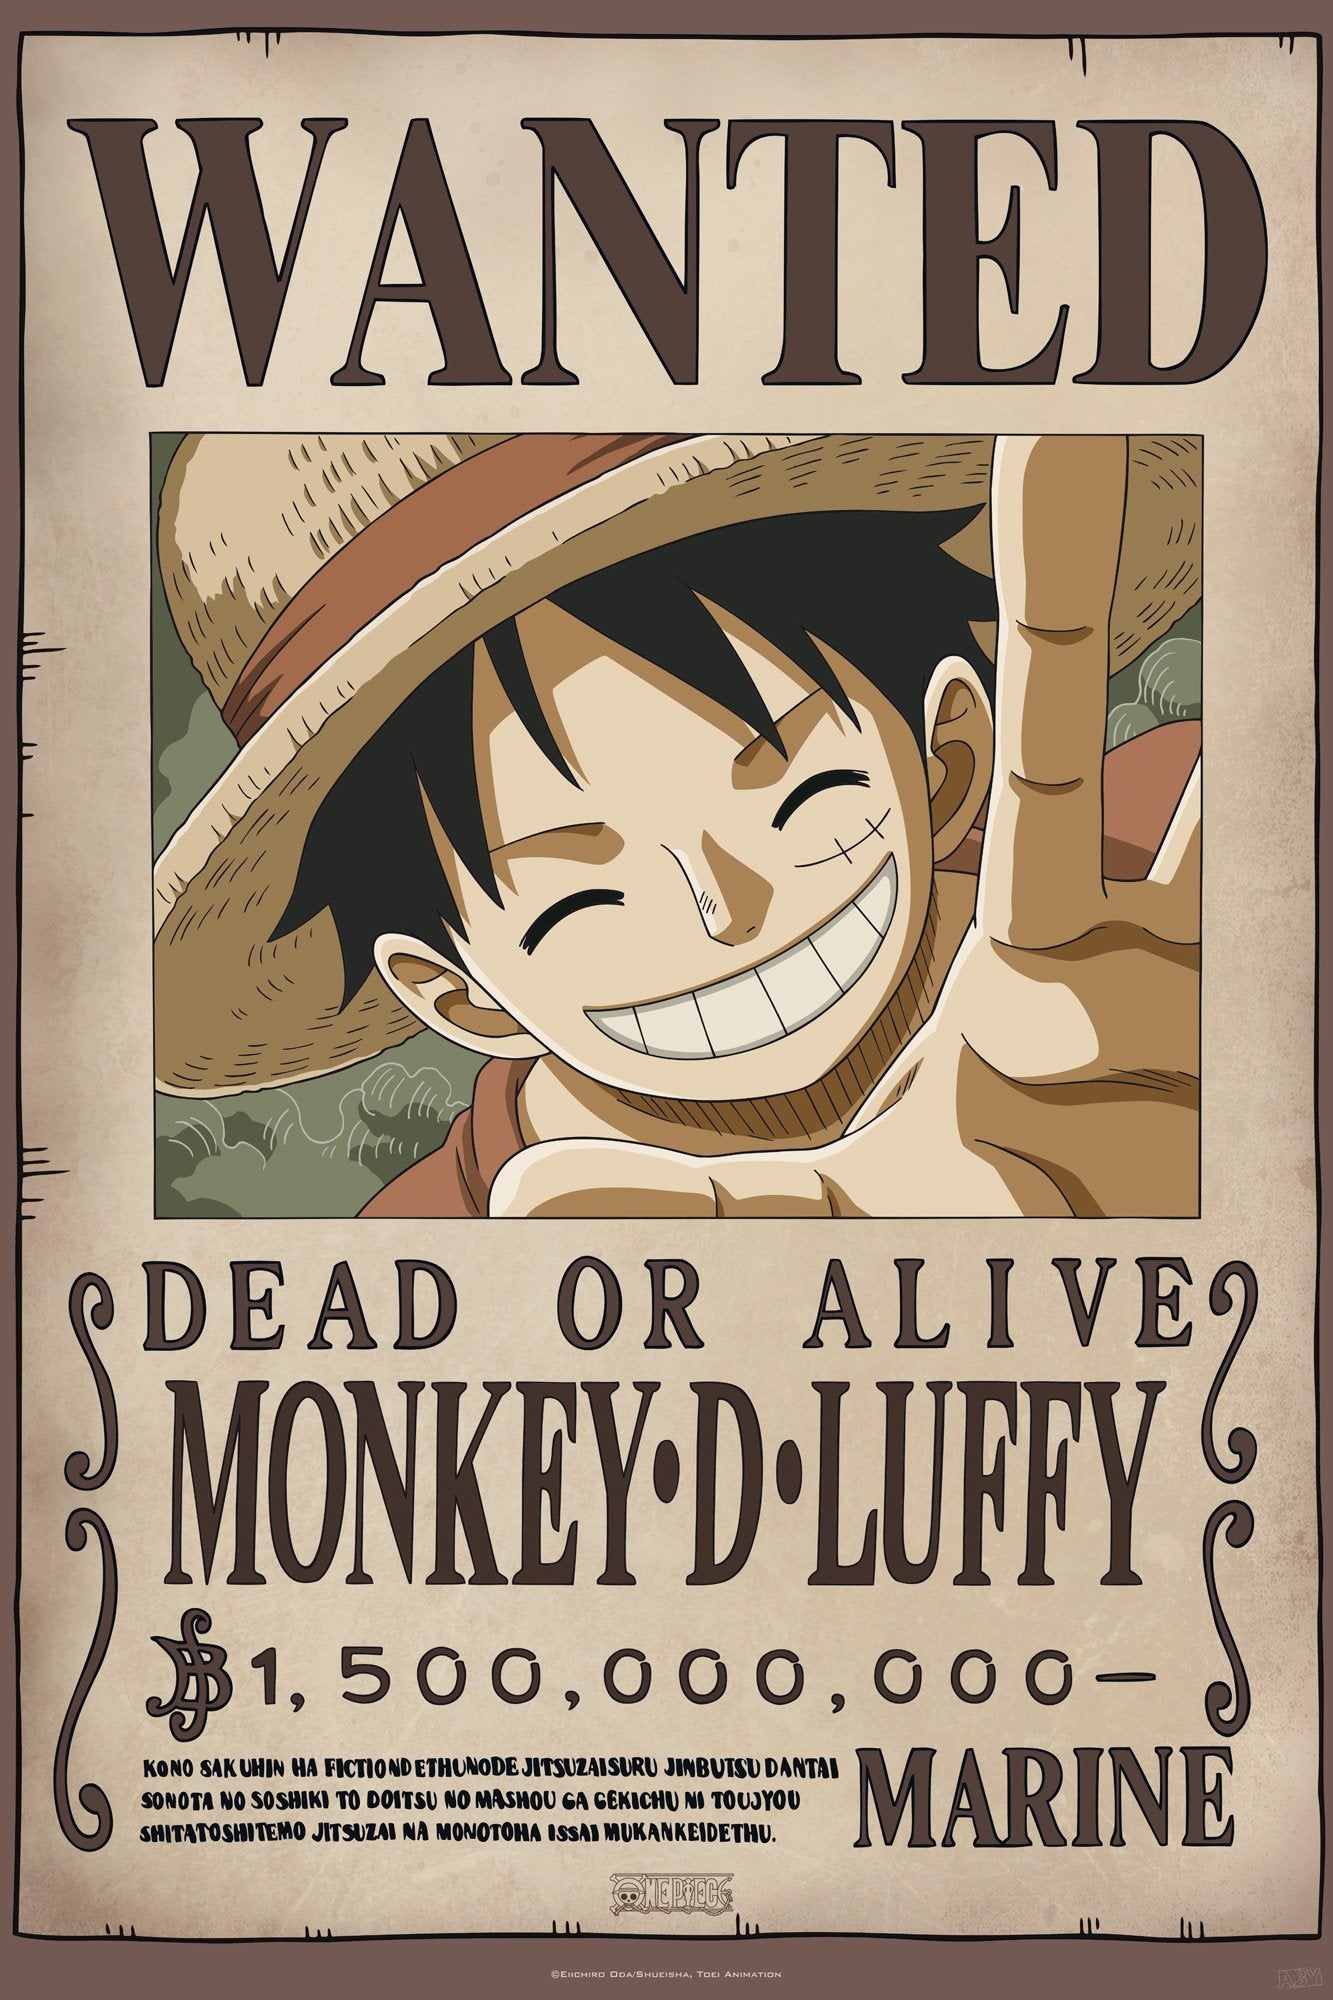 Manga posters - Manga One Piece Wanted poster ABYDCO583 – Panic Posters